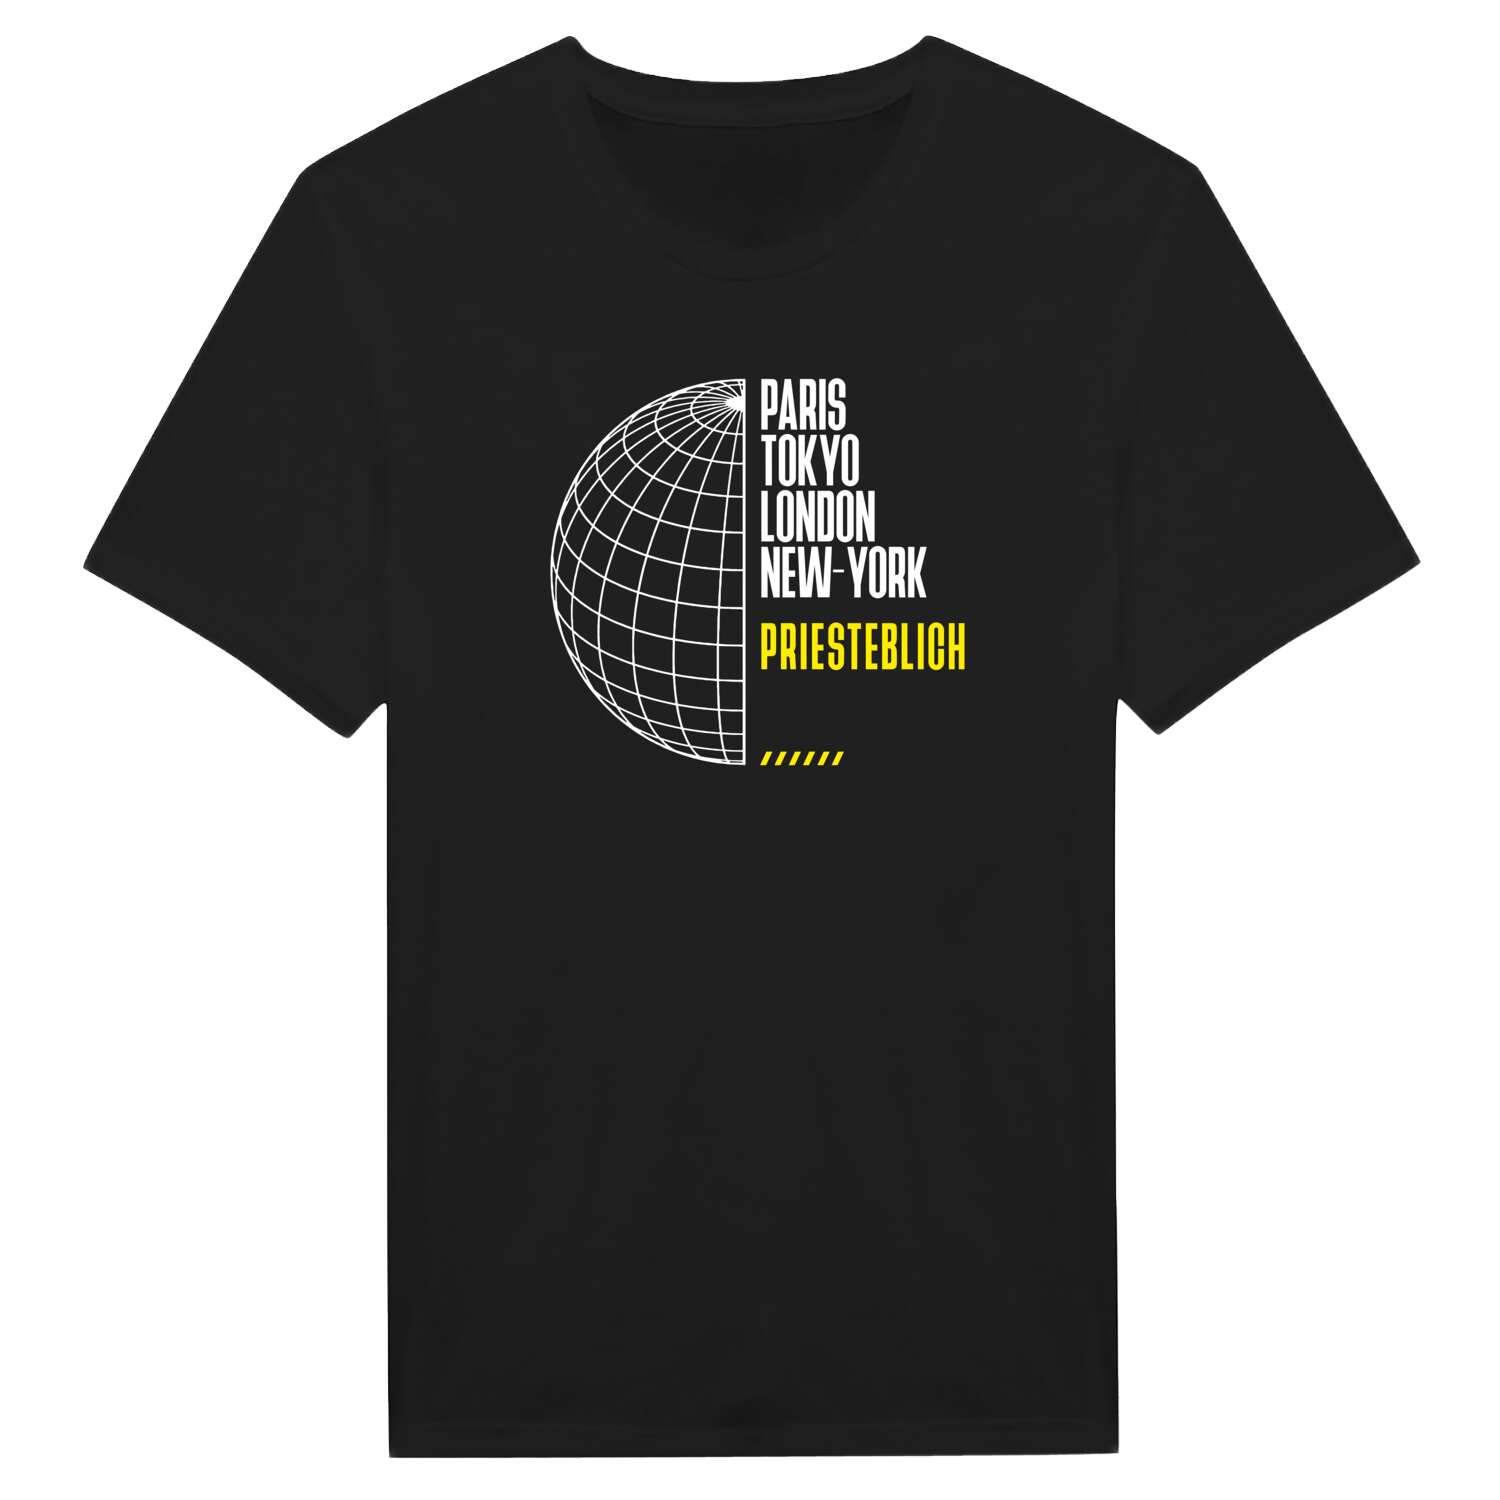 Priesteblich T-Shirt »Paris Tokyo London«